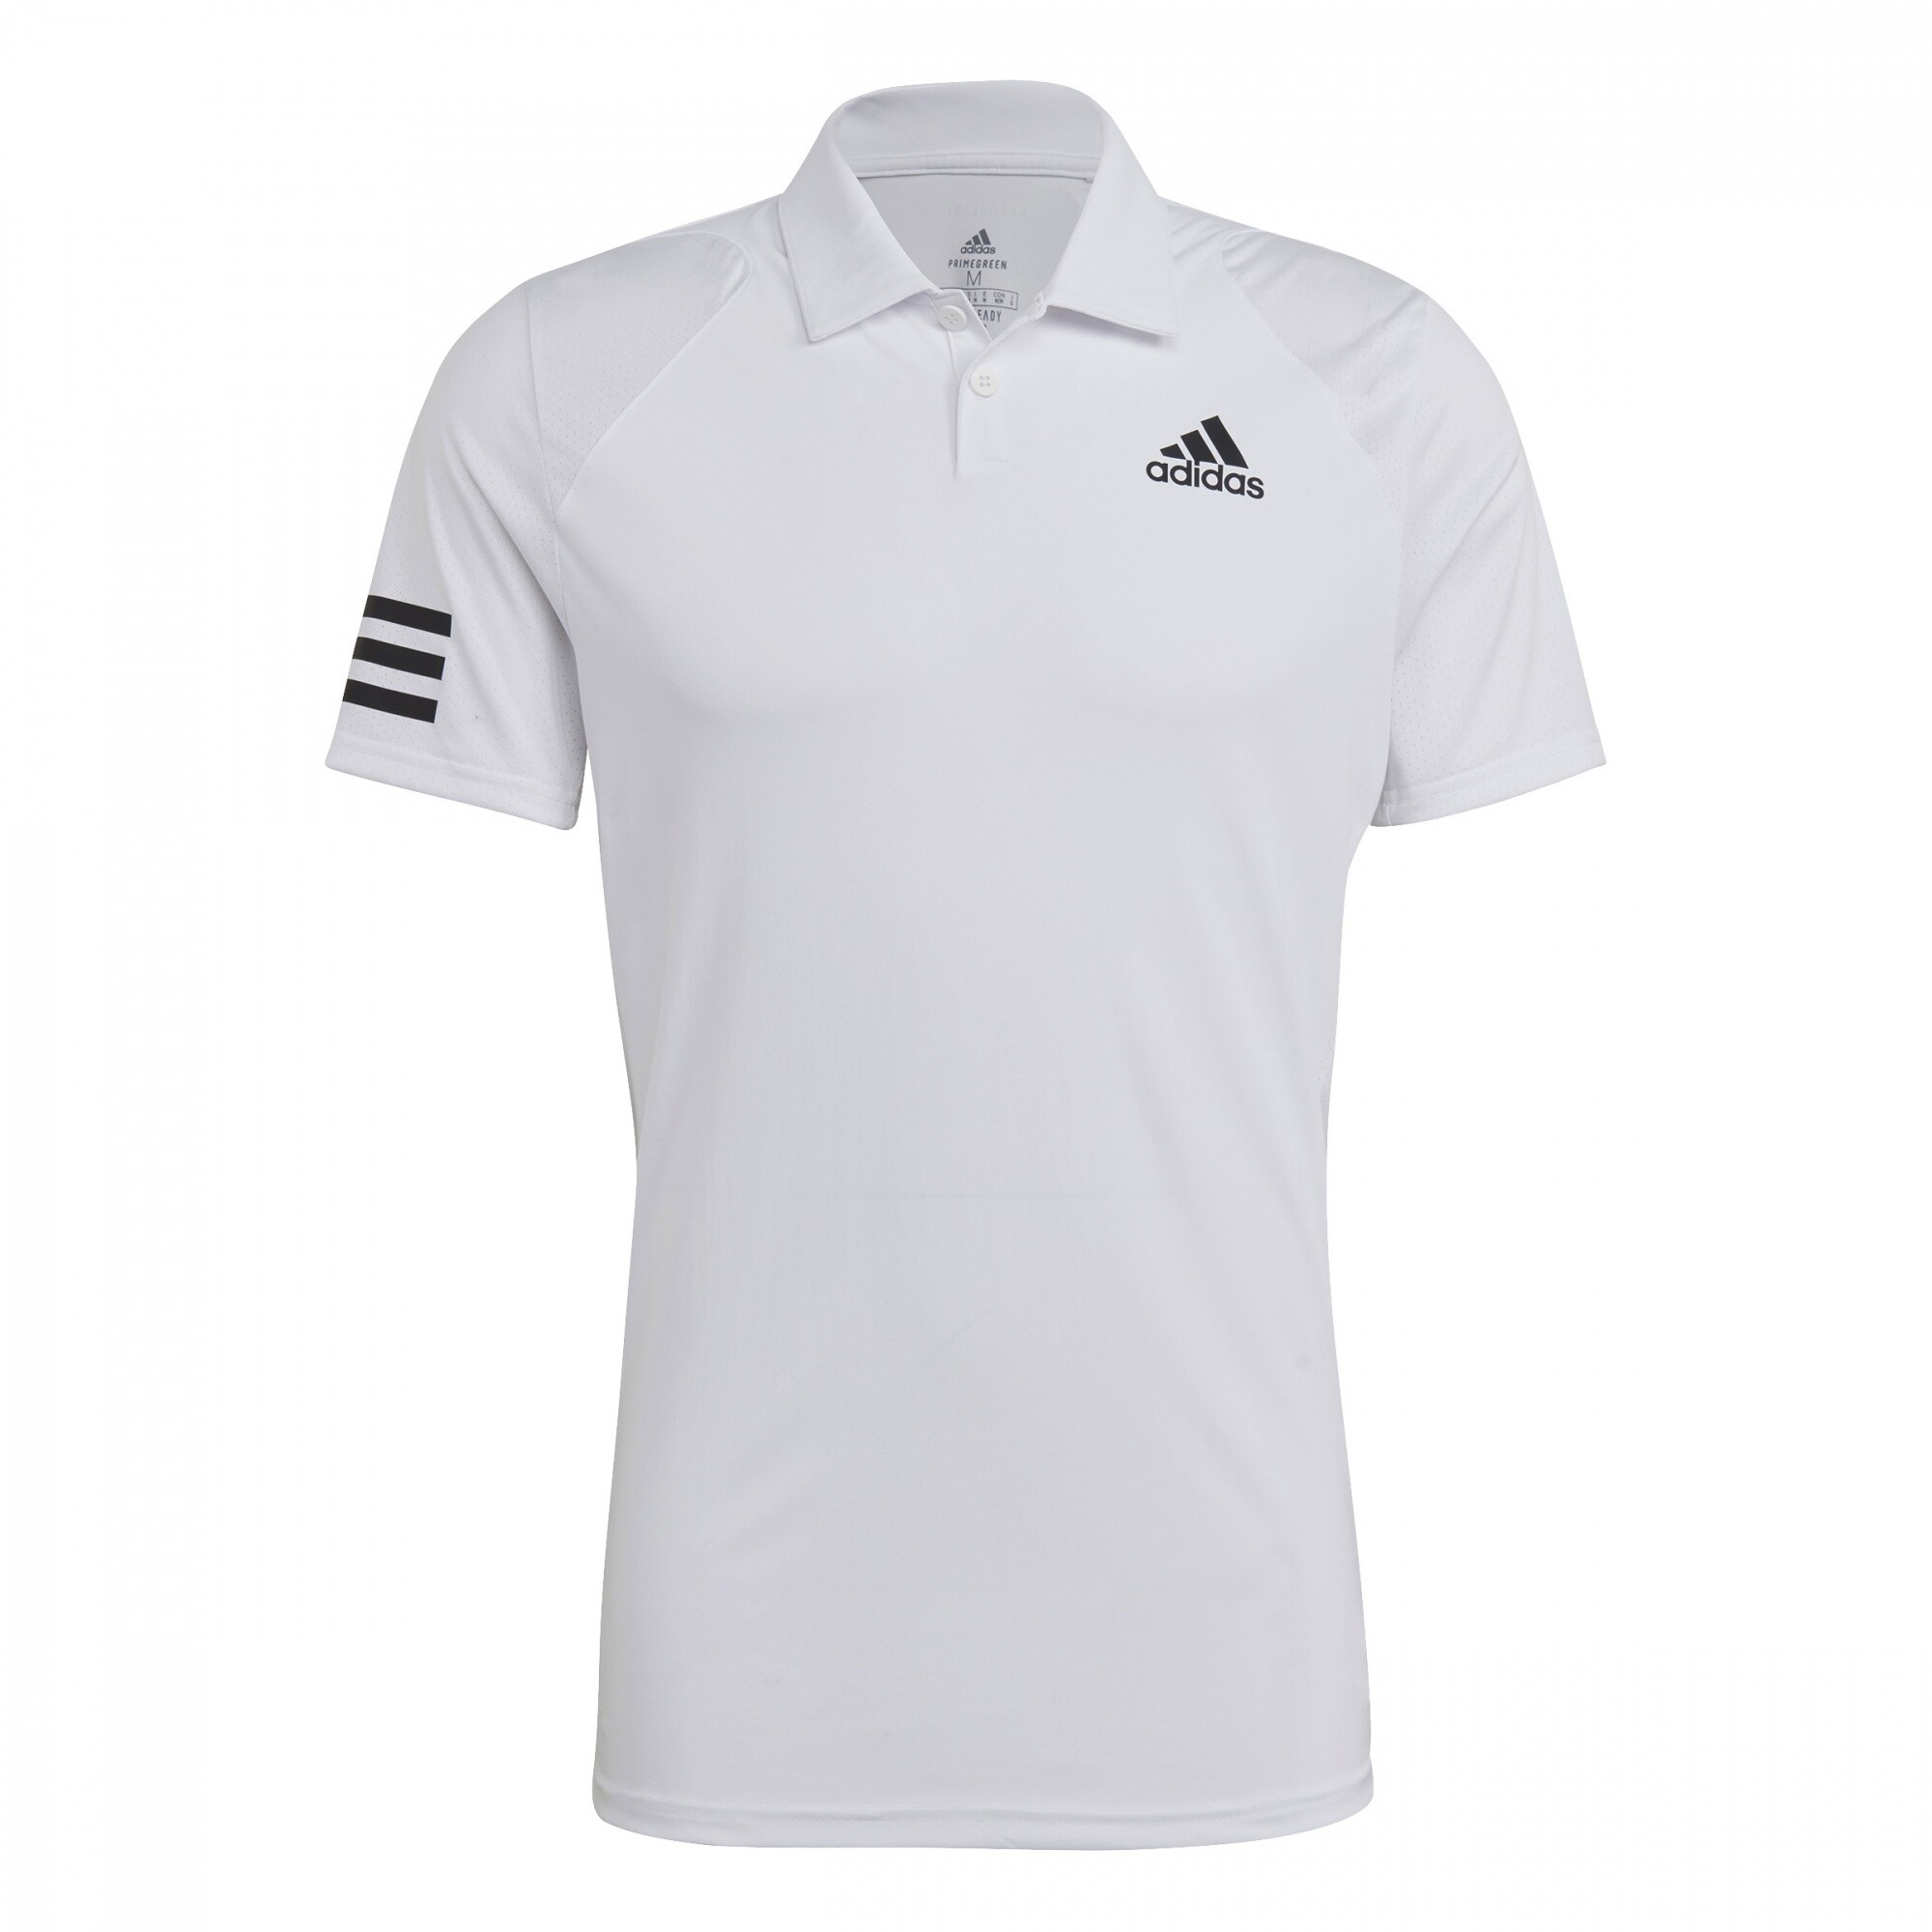 Remera Adidas Tennis Hombre 3str White - S/C Menpi